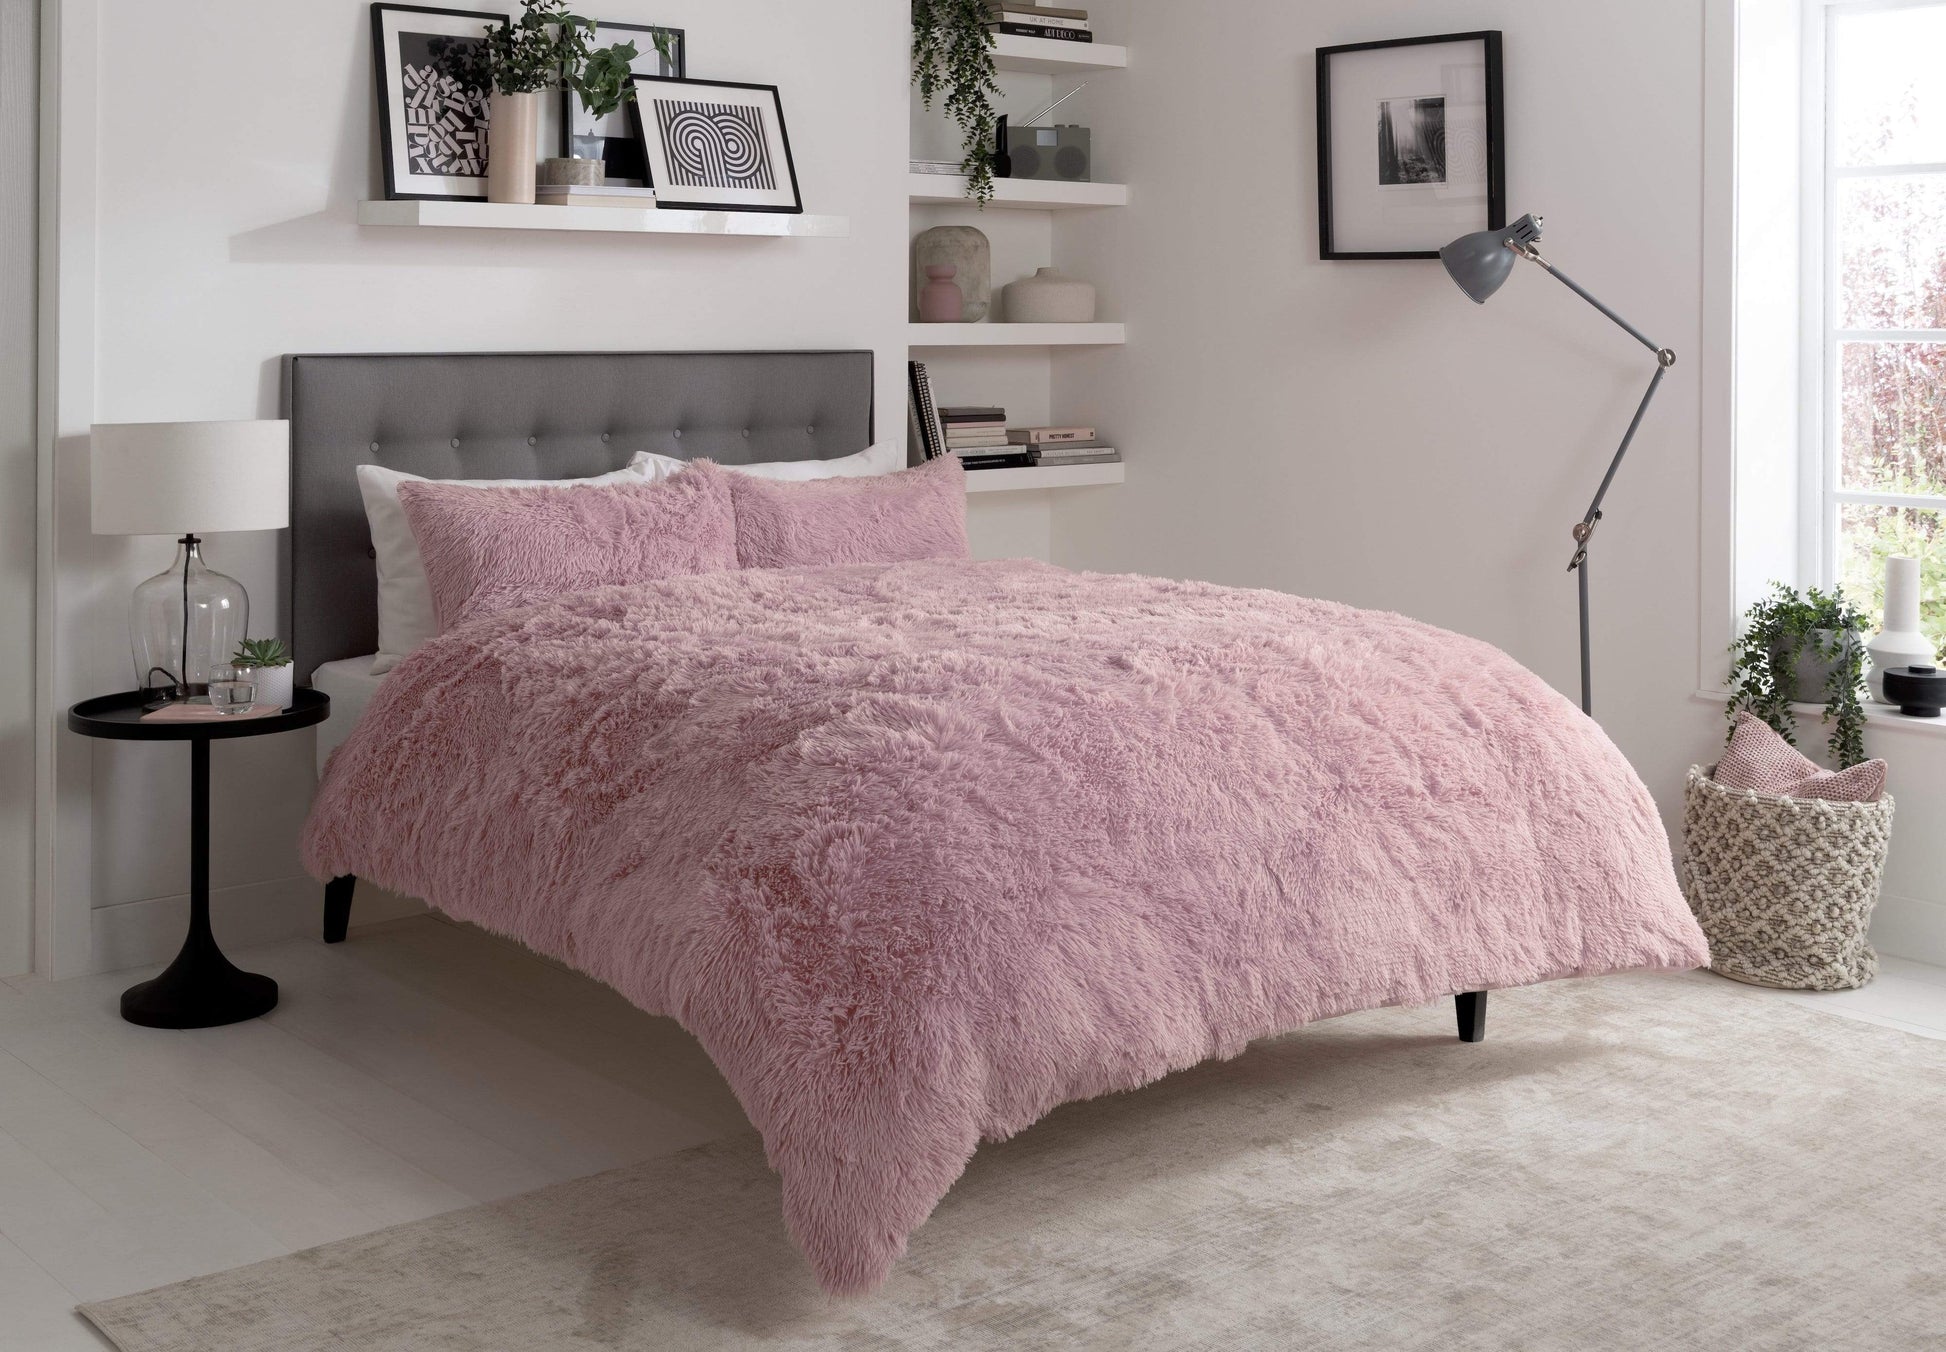 Snuggle & Cuddle Duvet Set, Fluffy Huggable Bed Cover SINGLE / BLUSH PINK OLIVIA ROCCO Duvet Cover